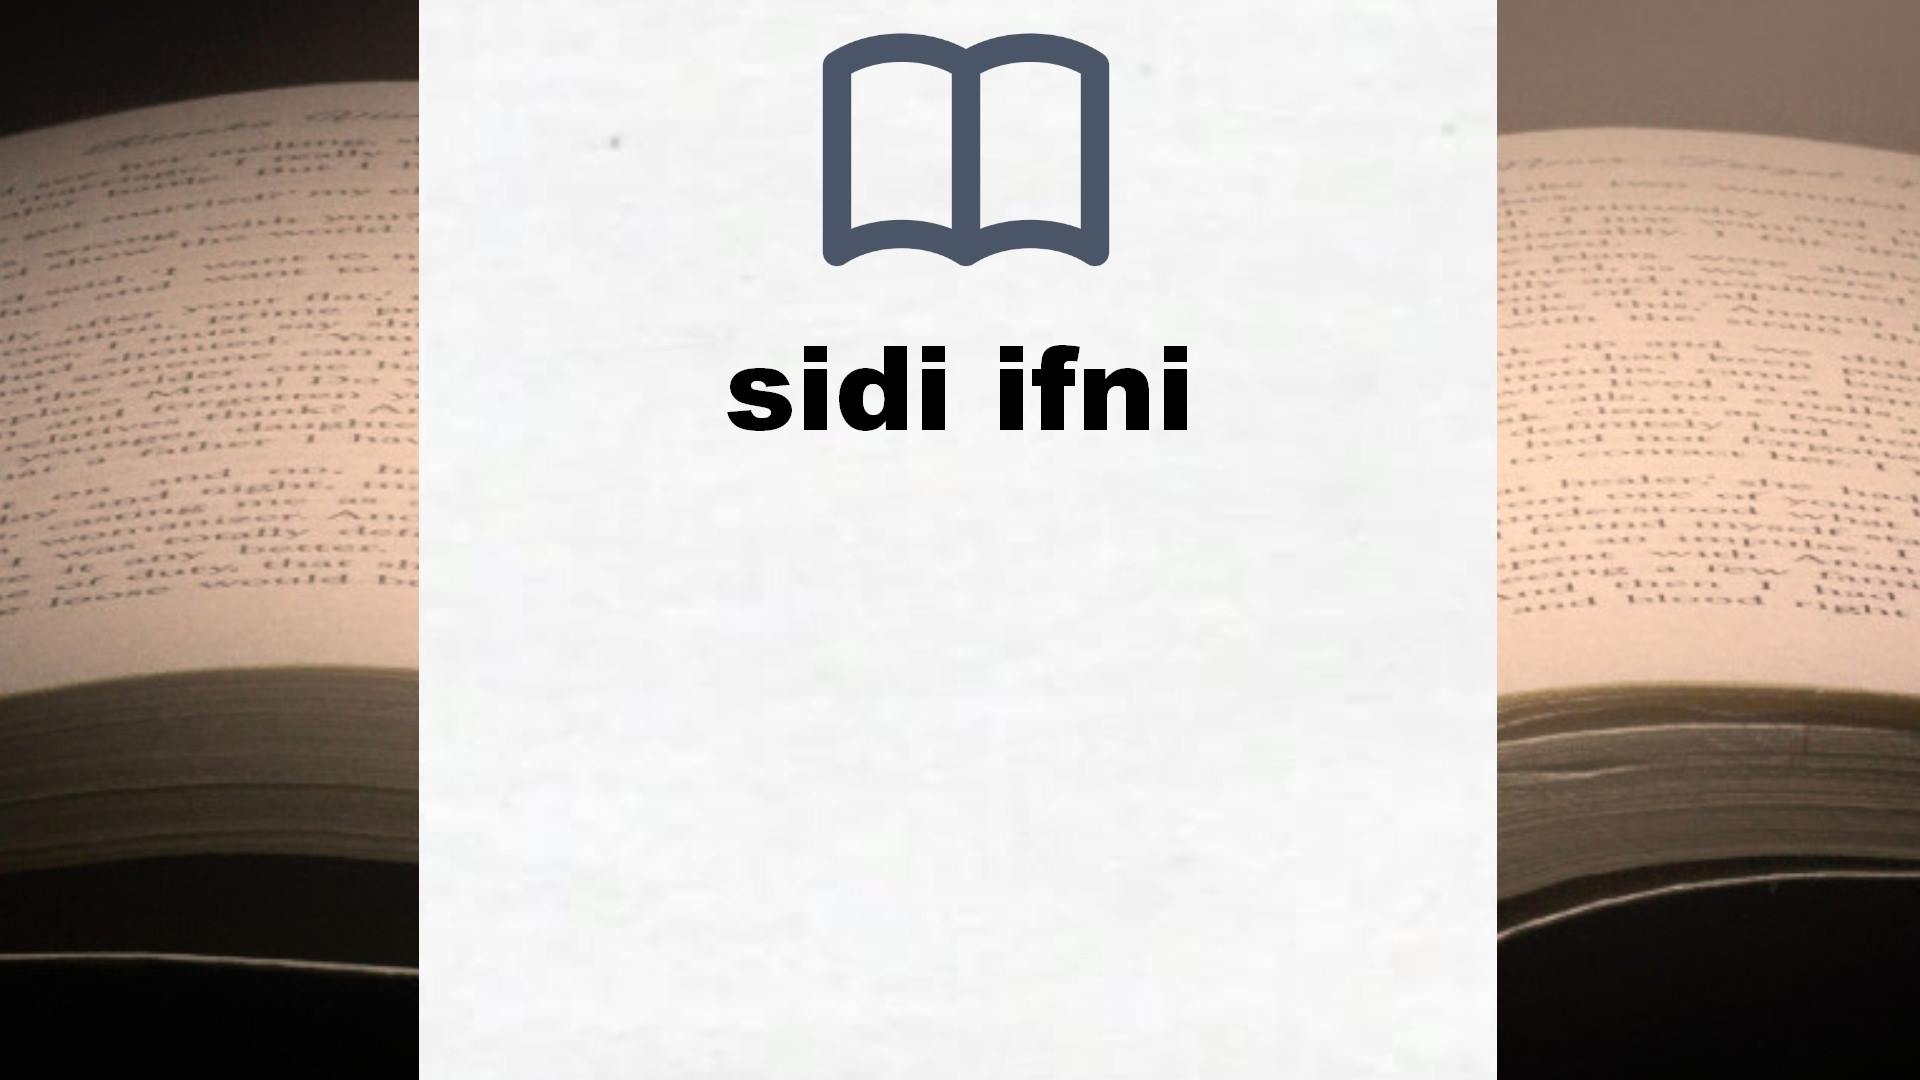 Libros sobre sidi ifni